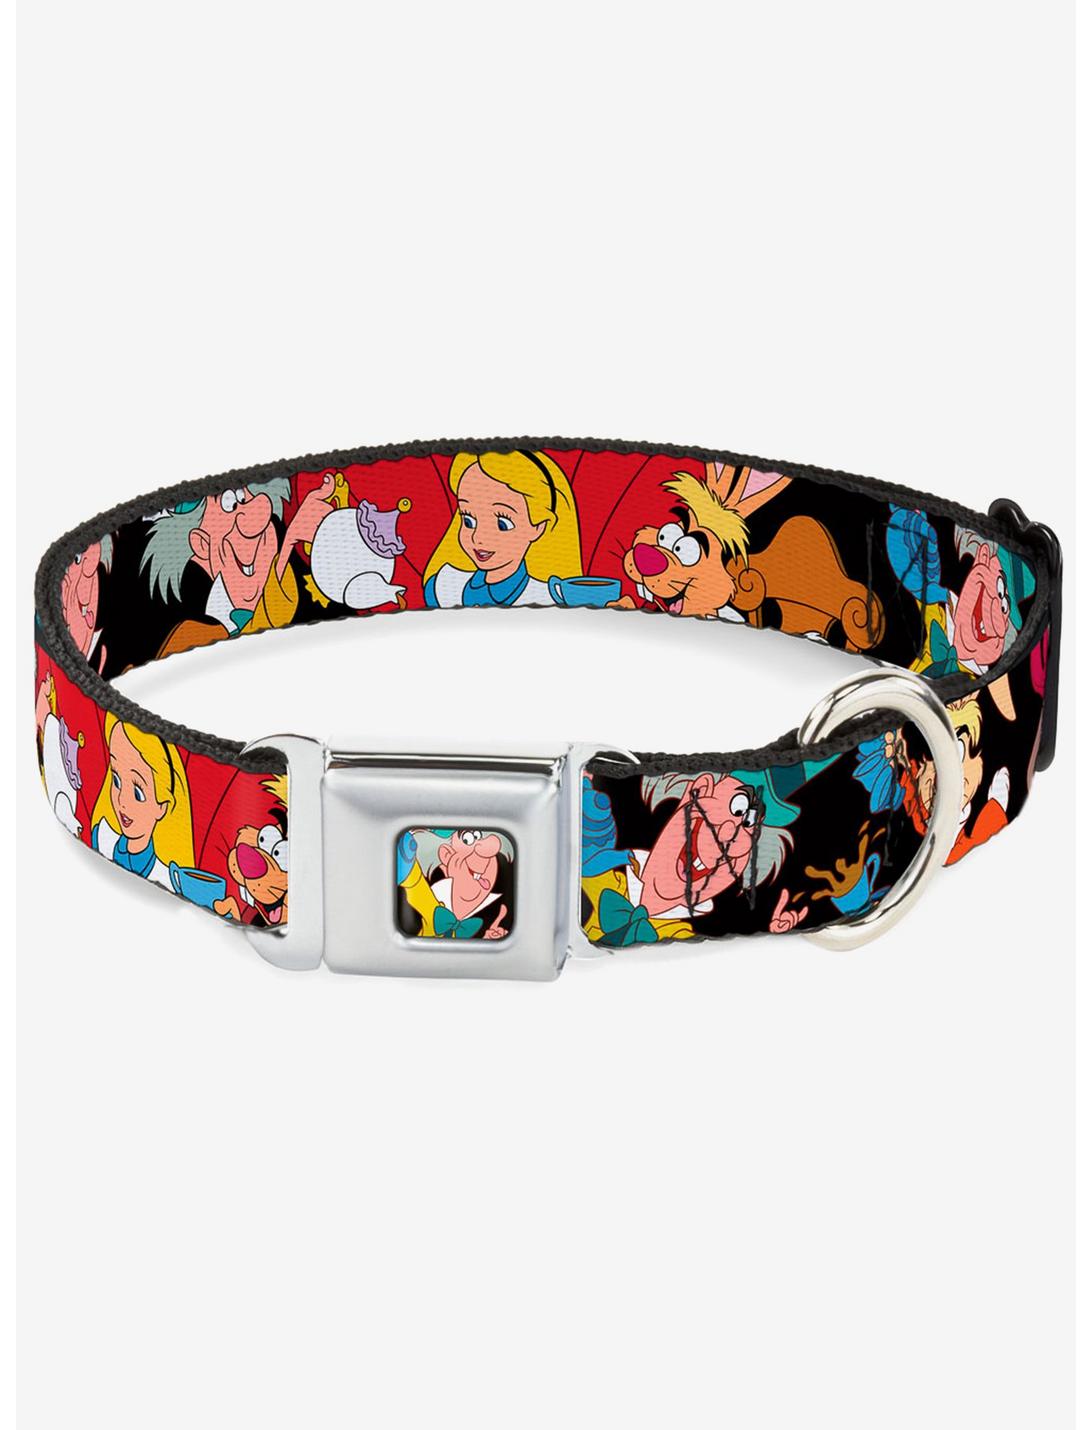 Disney Alice in Wonderland Mad Hatters Tea Party Poses Seatbelt Buckle Dog Collar, MULTI, hi-res